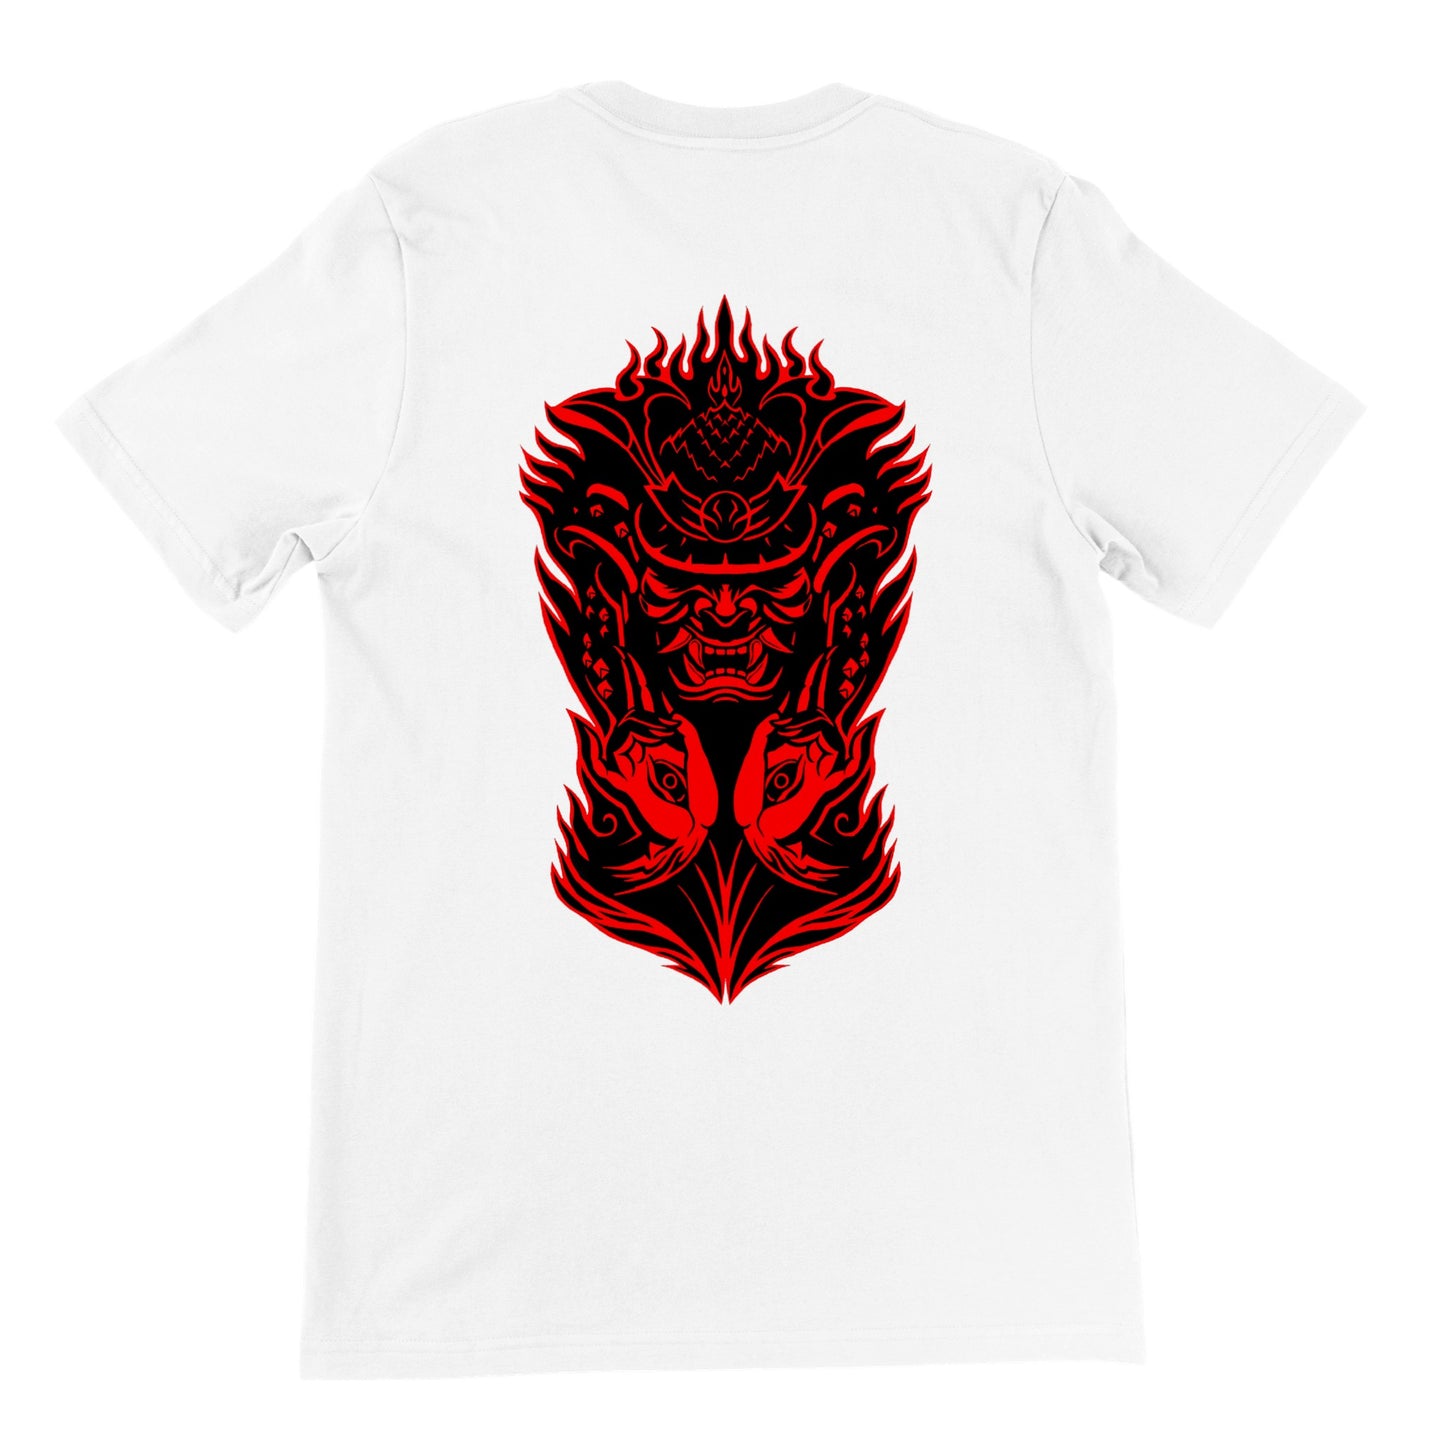 KURO SHADOWS "Red Samurai" Premium Unisex Crewneck T-shirt